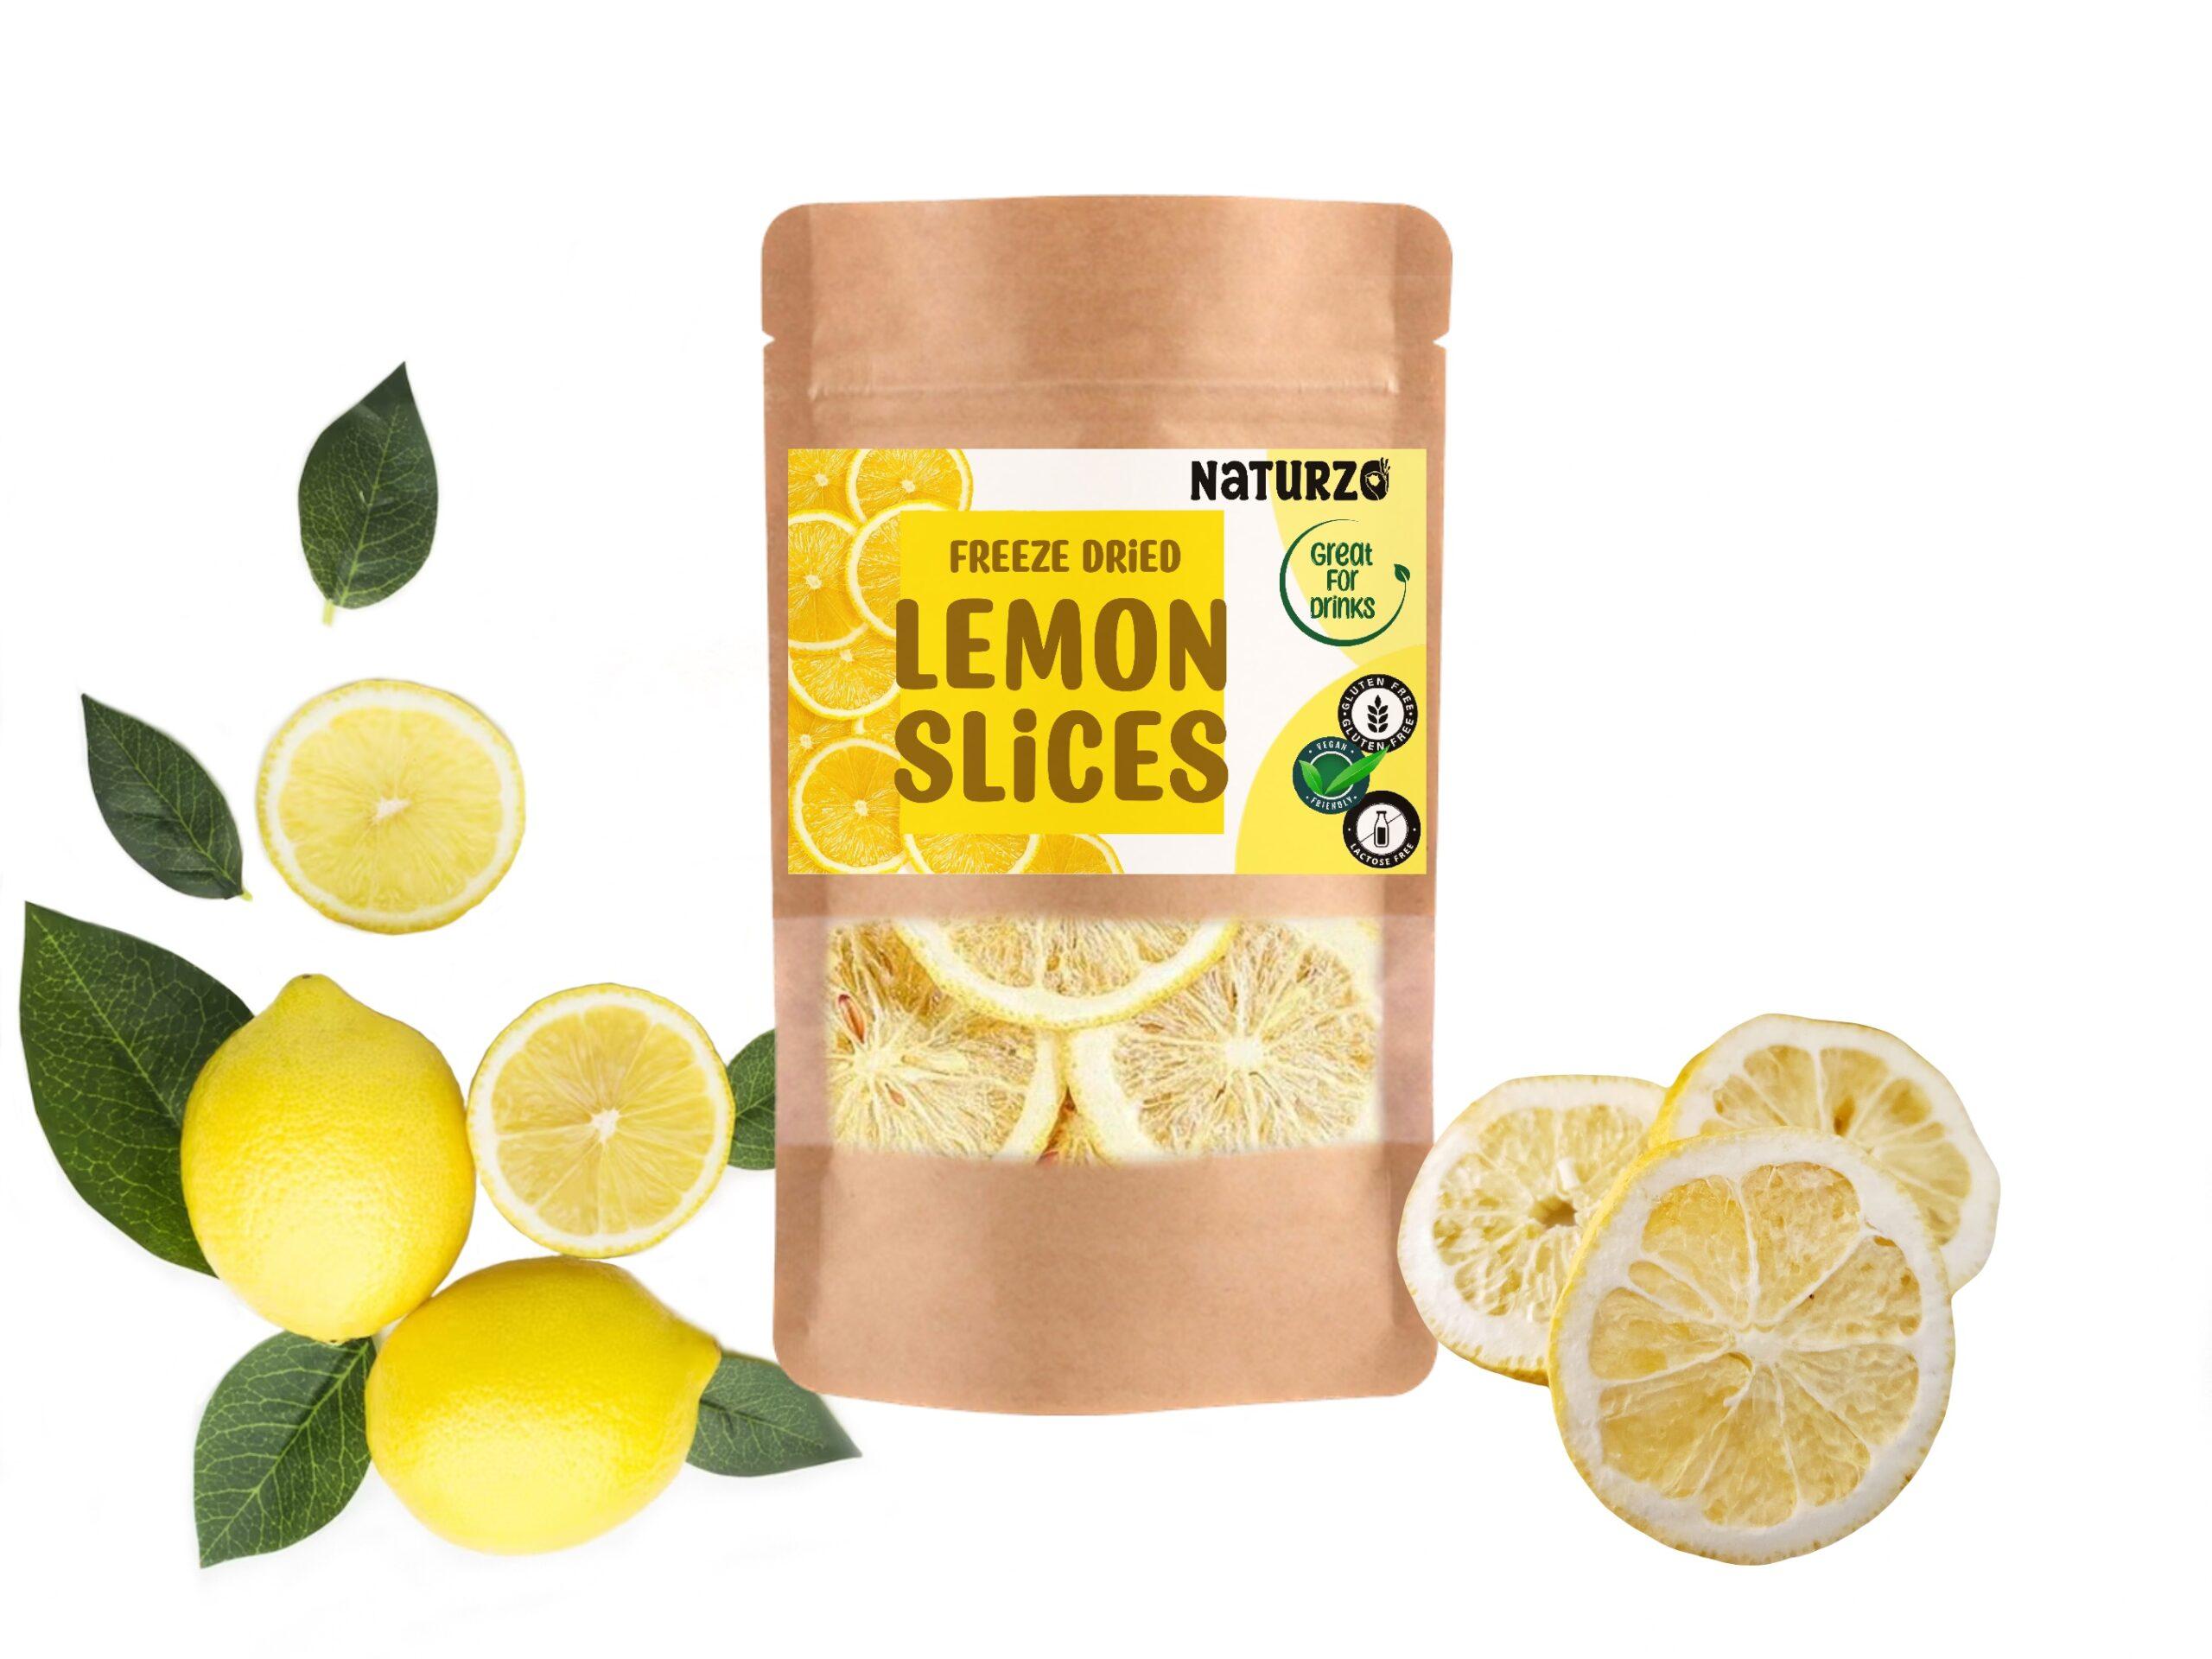 Freeze dried Lemon slices